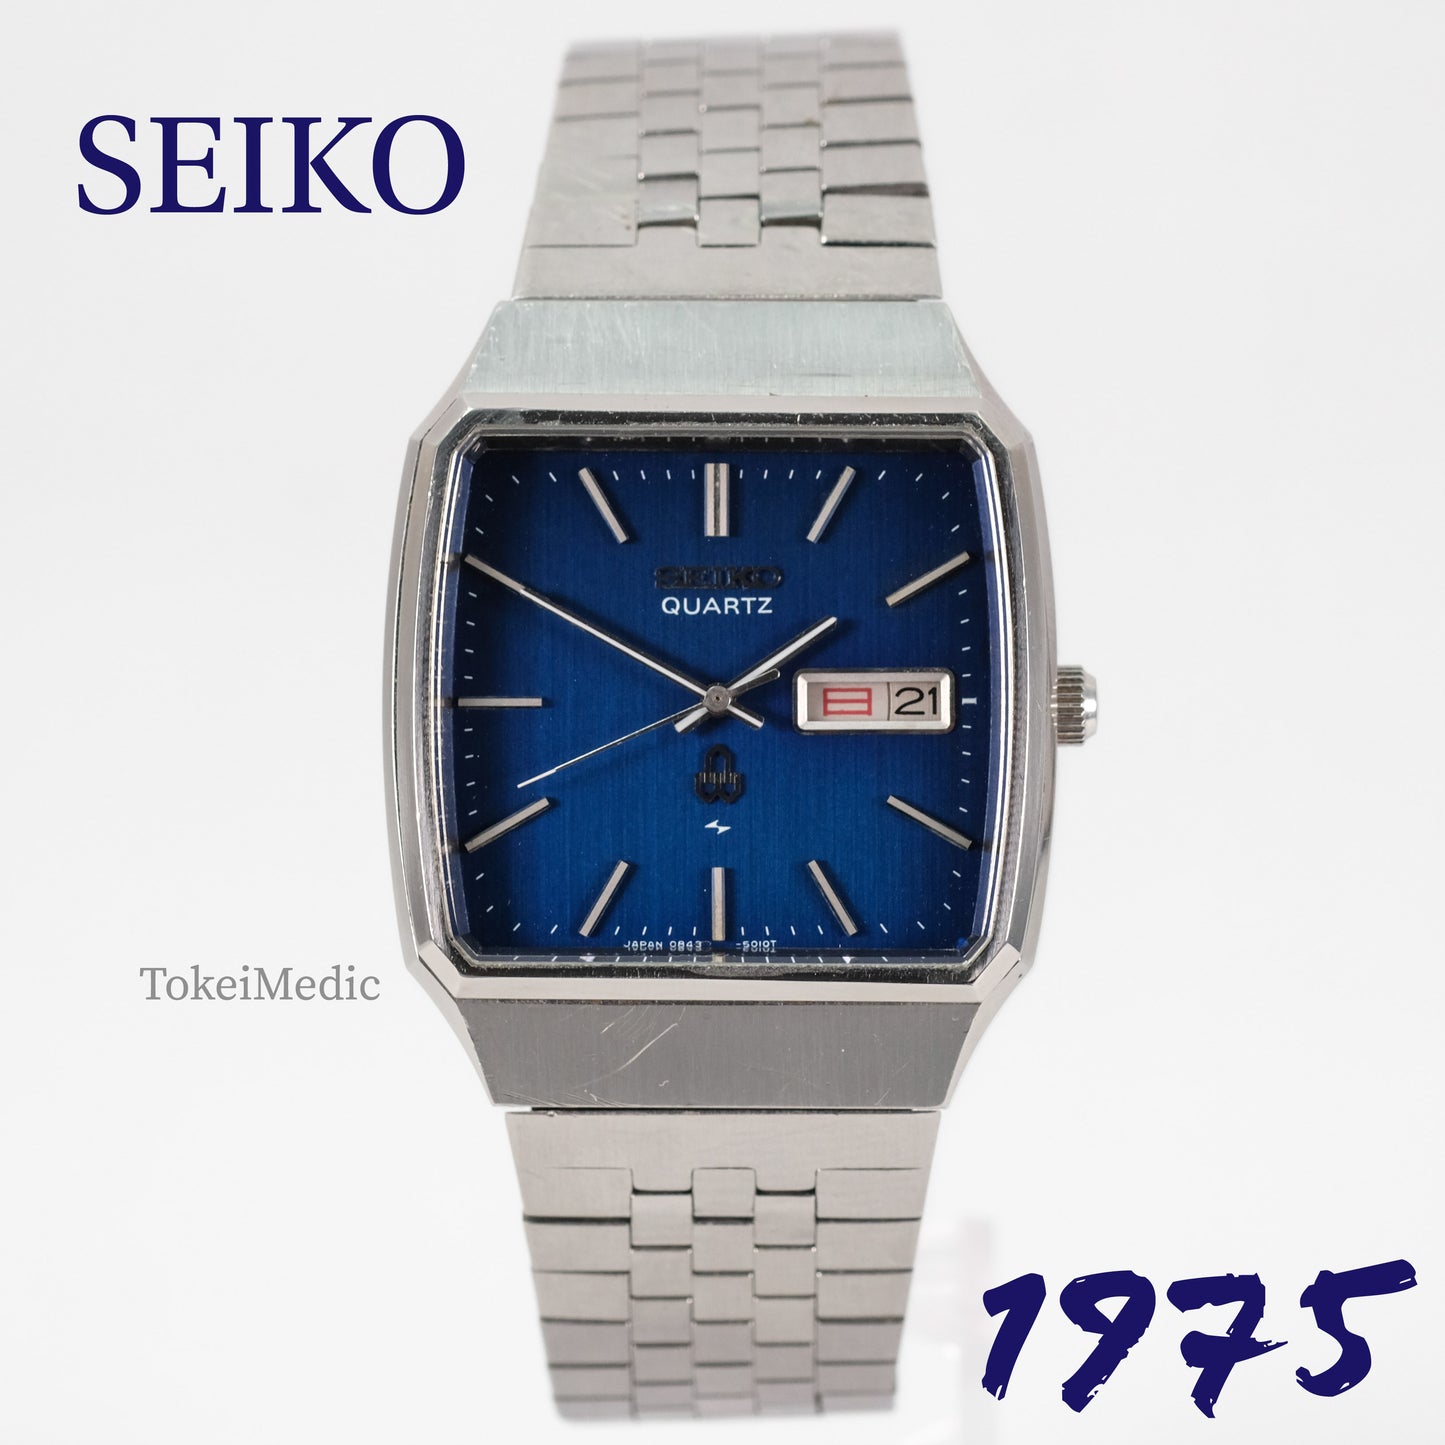 1975 Seiko Quartz 0843-5010